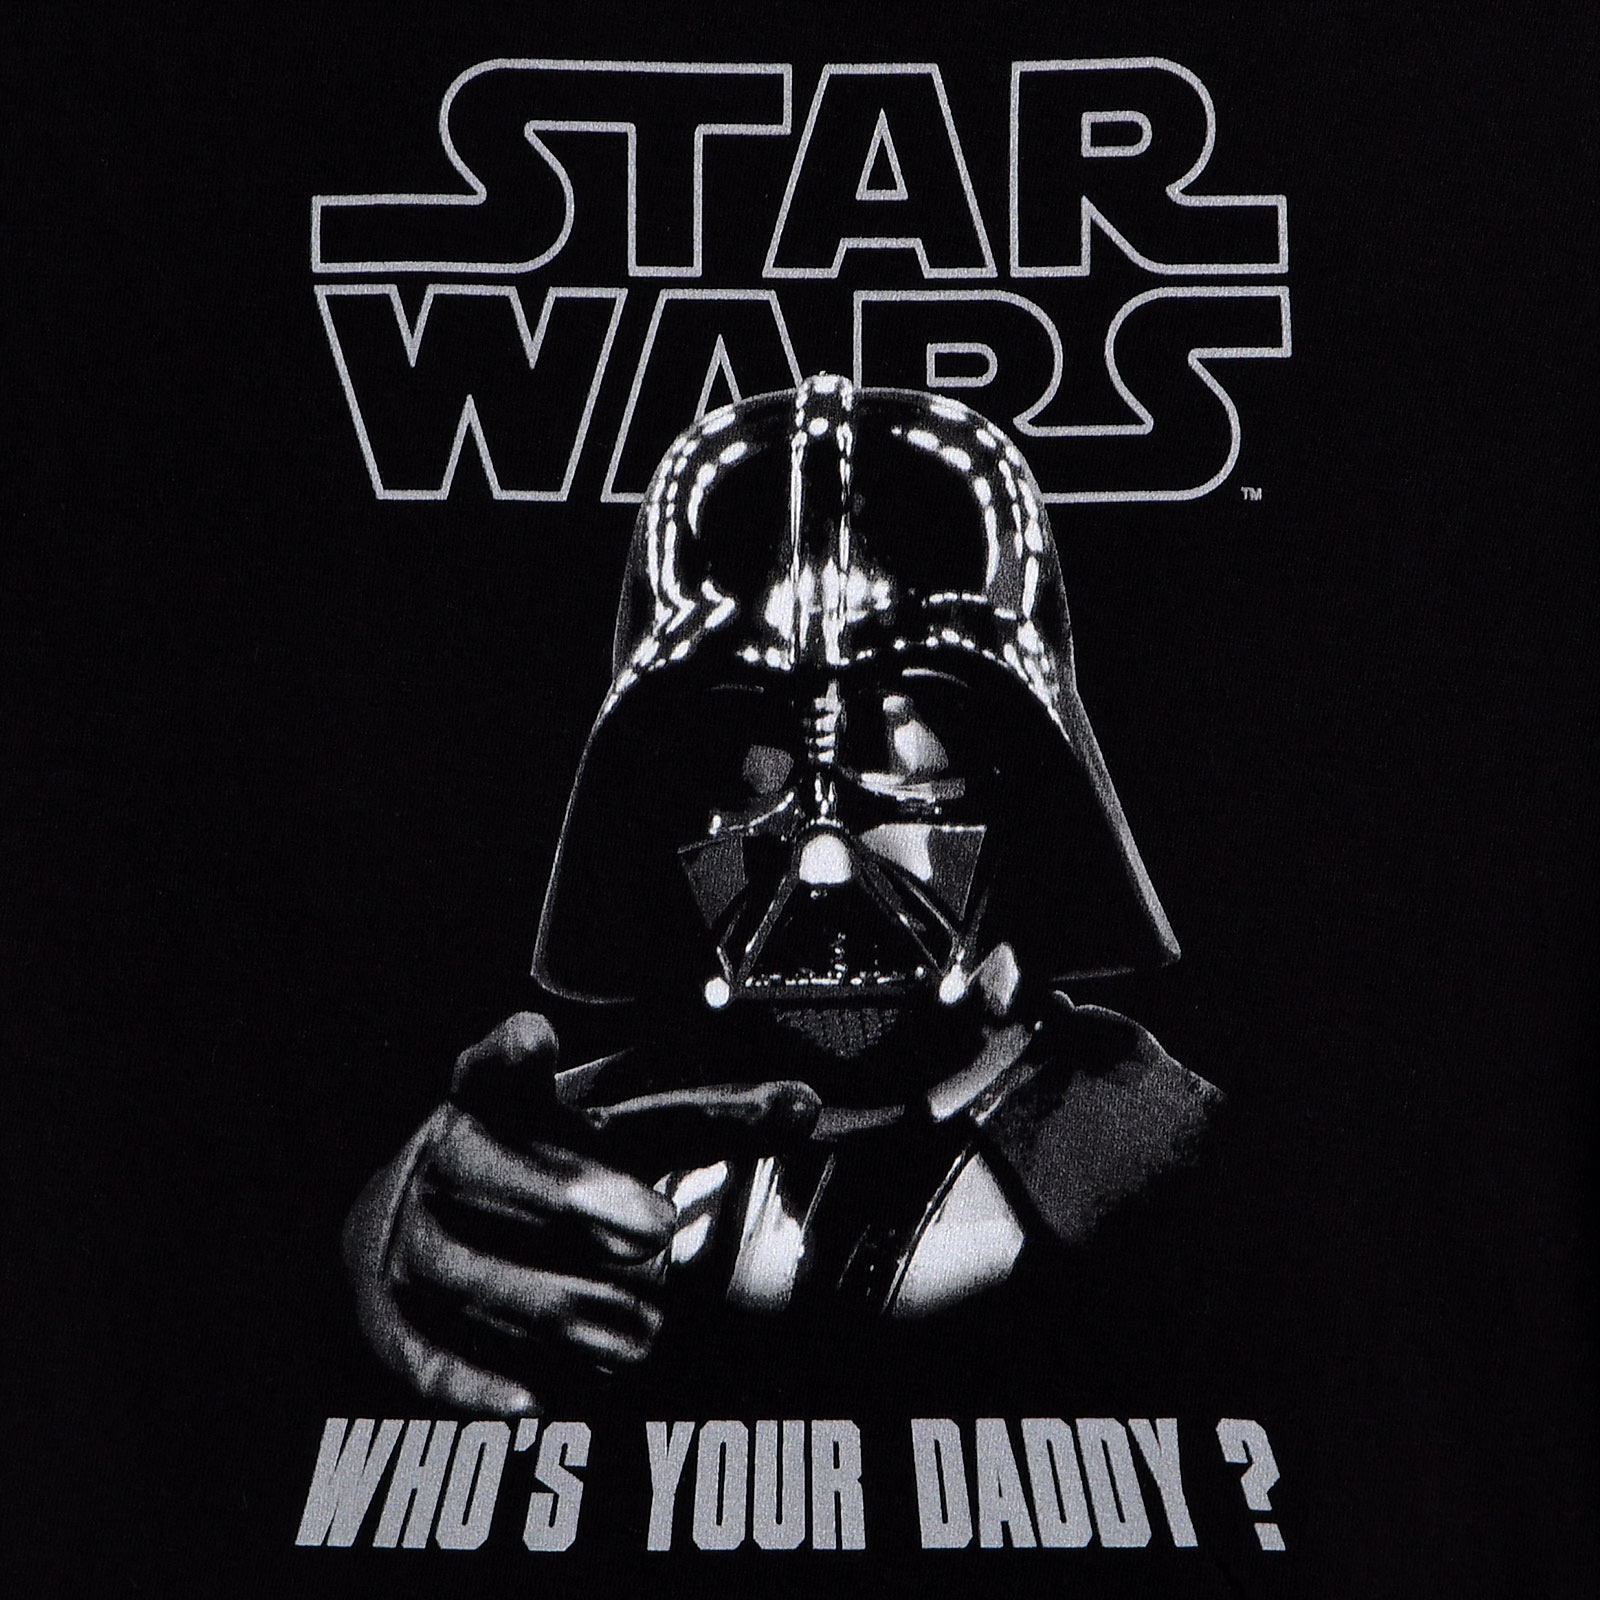 Star Wars - Dark Vador Qui est ton papa T-shirt Enfant noir